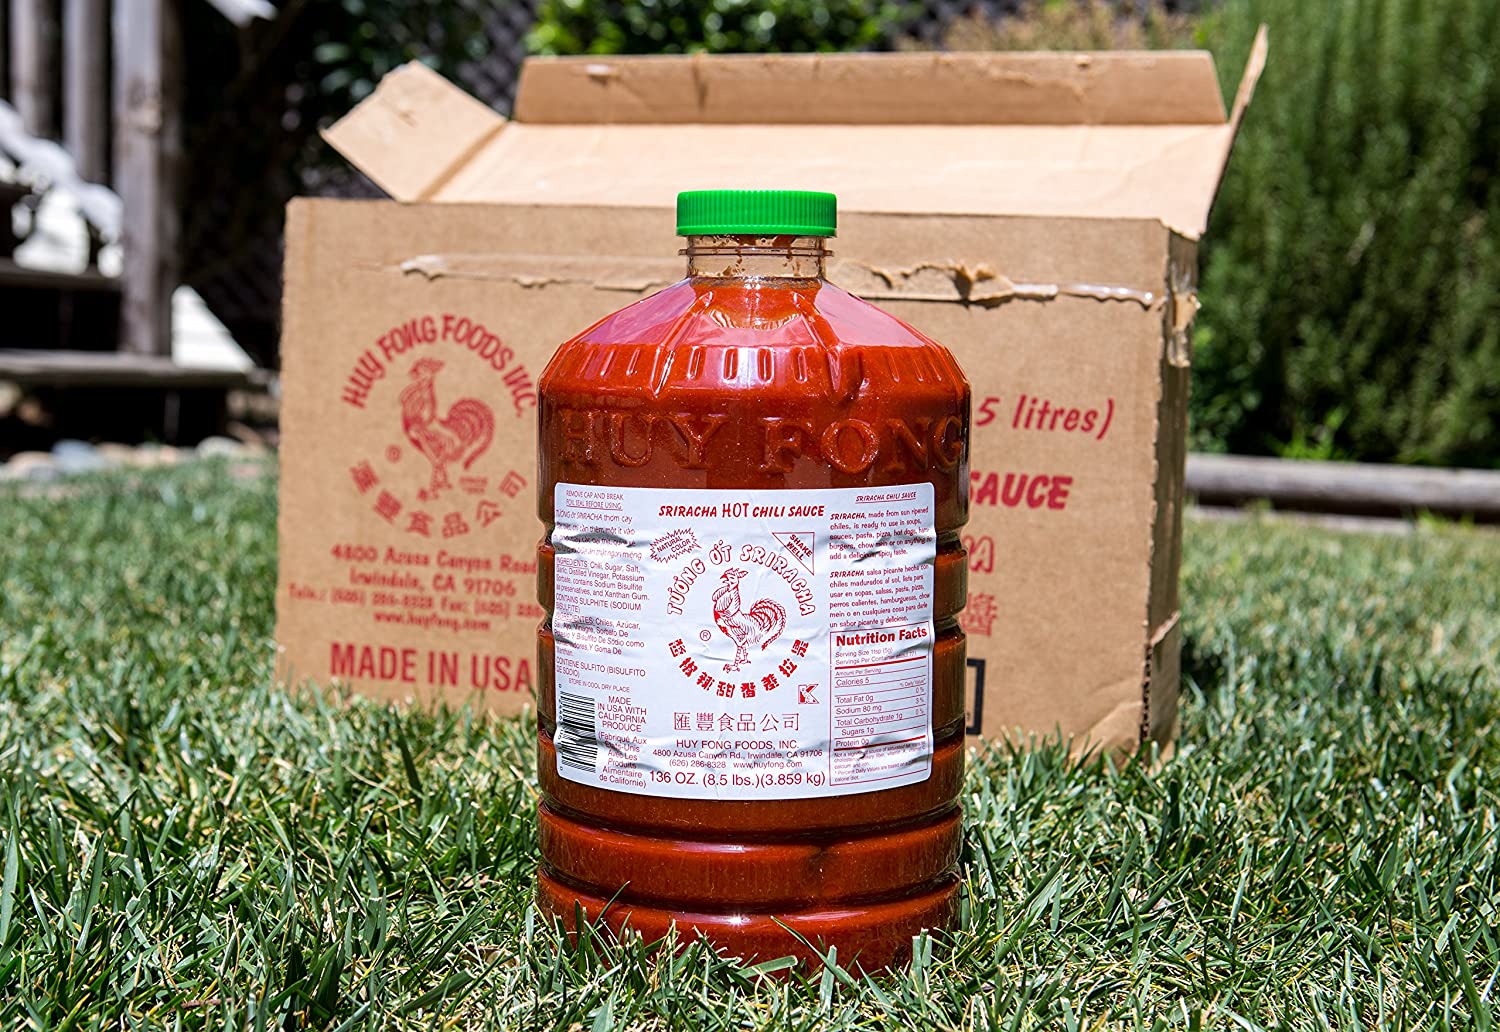 Huy Fong Sriracha chilli Sauce